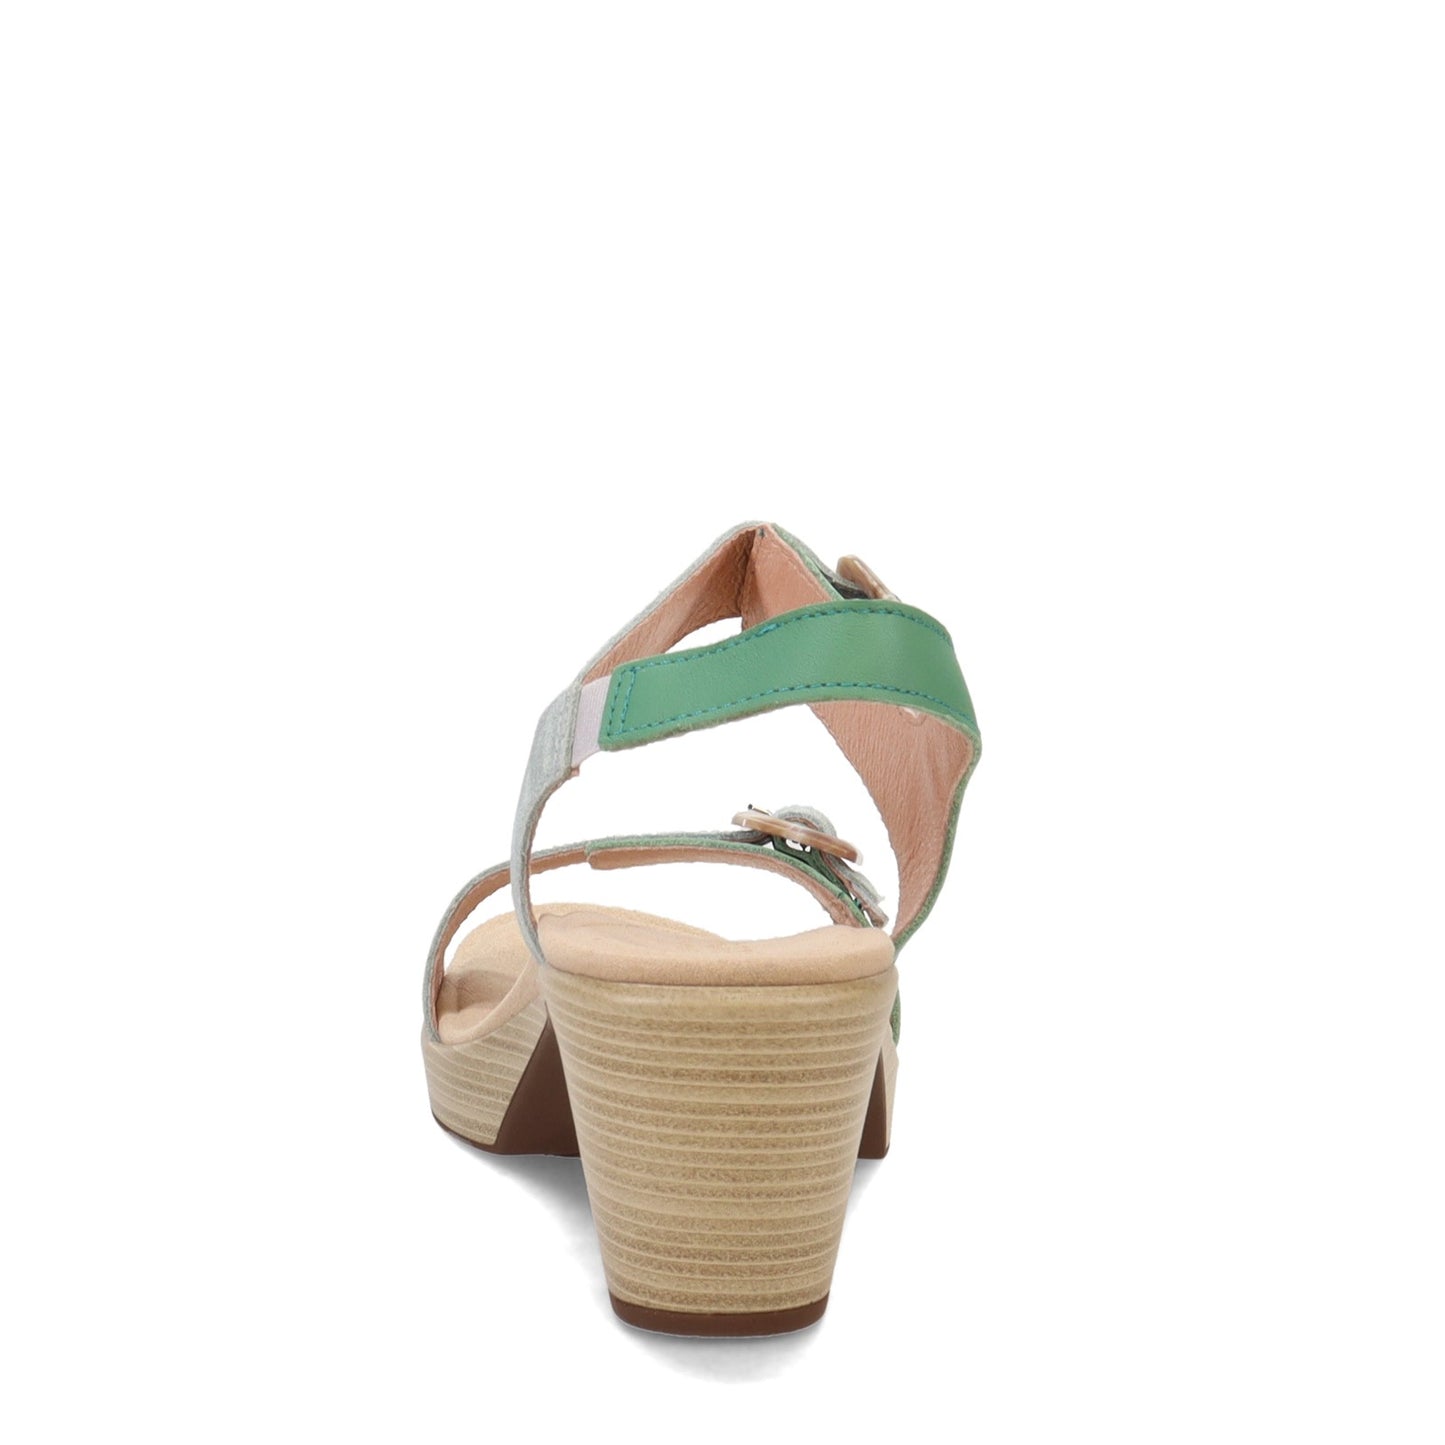 Peltz Shoes  Women's Naot Mode Sandal Jade/Teal/Lime/Silver 40042-VBO